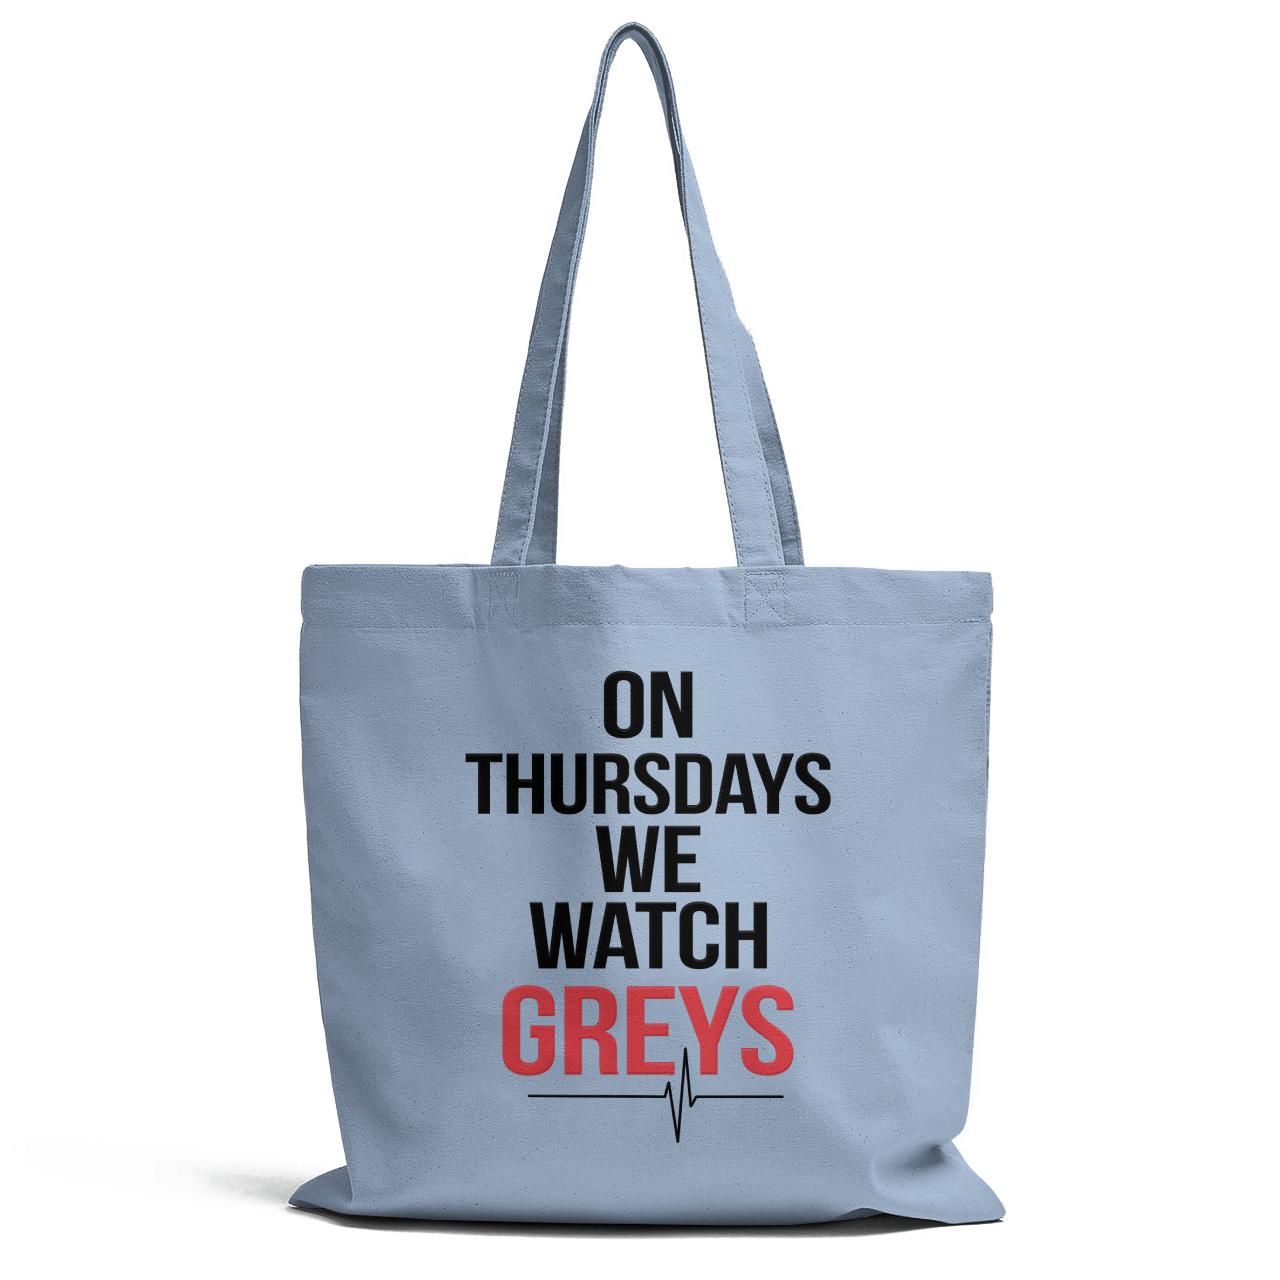 On Thursdays We Watch Greys Tote Bag